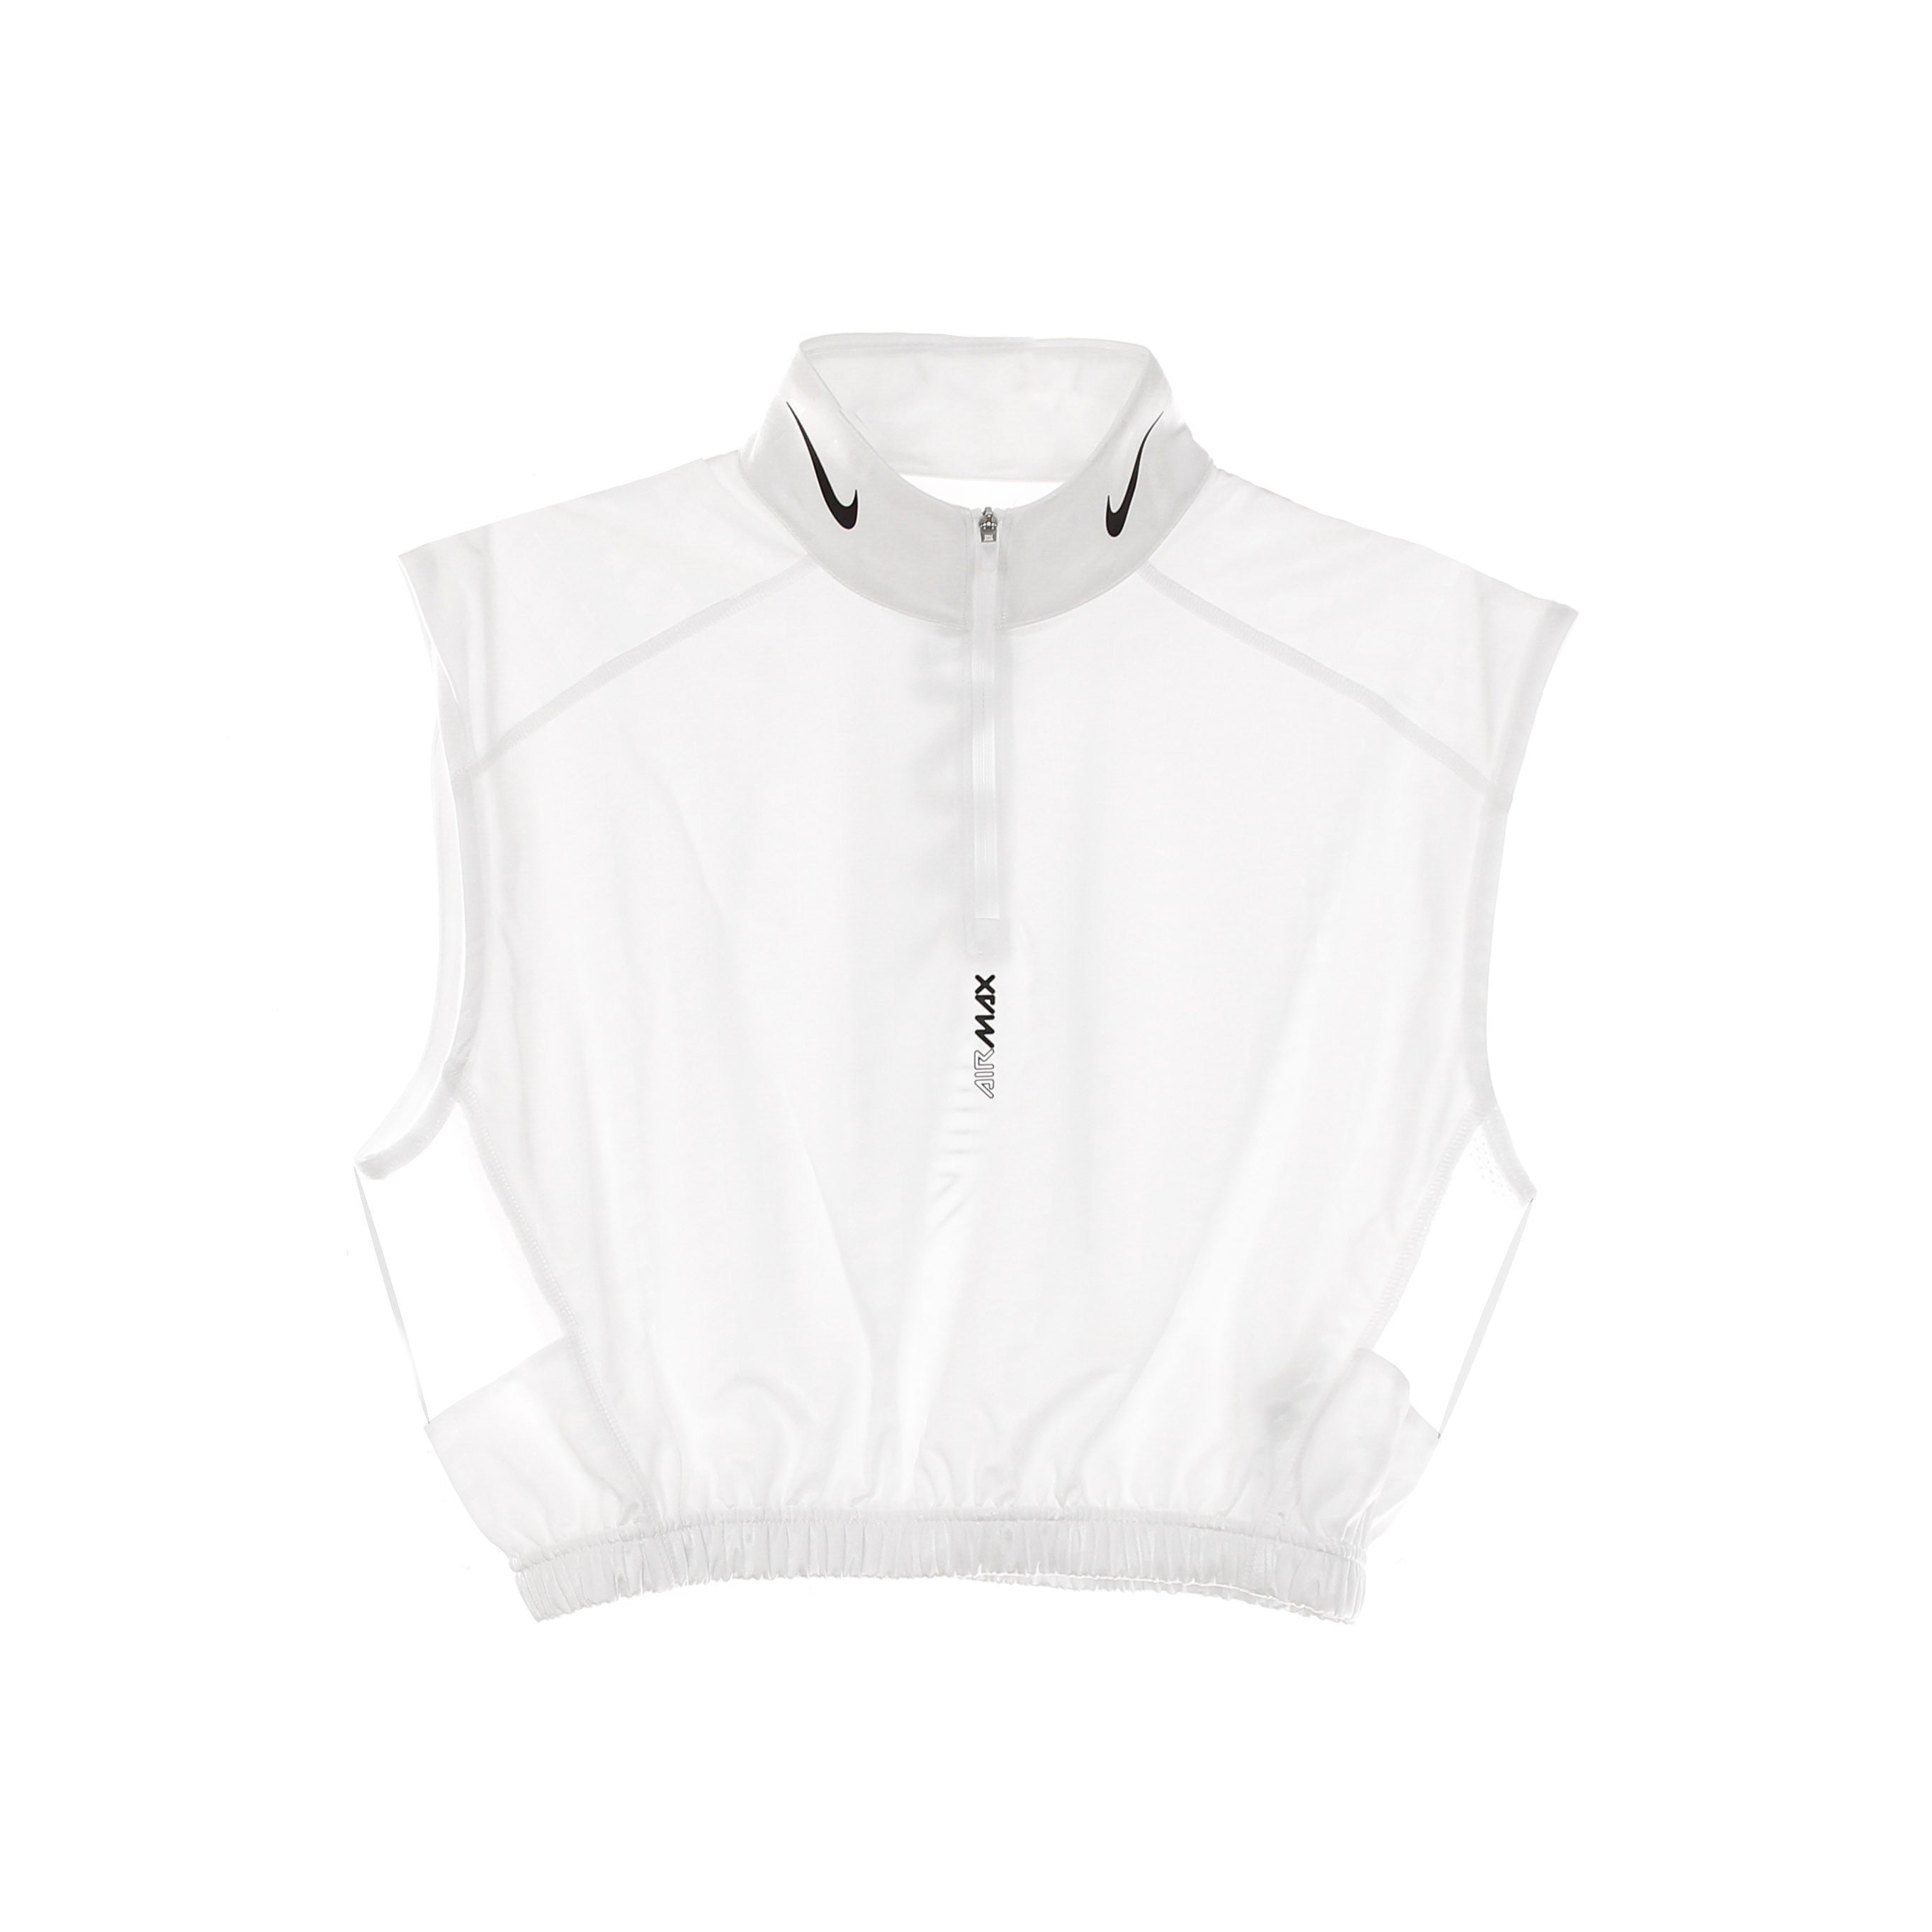 Top Donna W Sportswear Half Zip Sleeveless Top Amd White/white/black